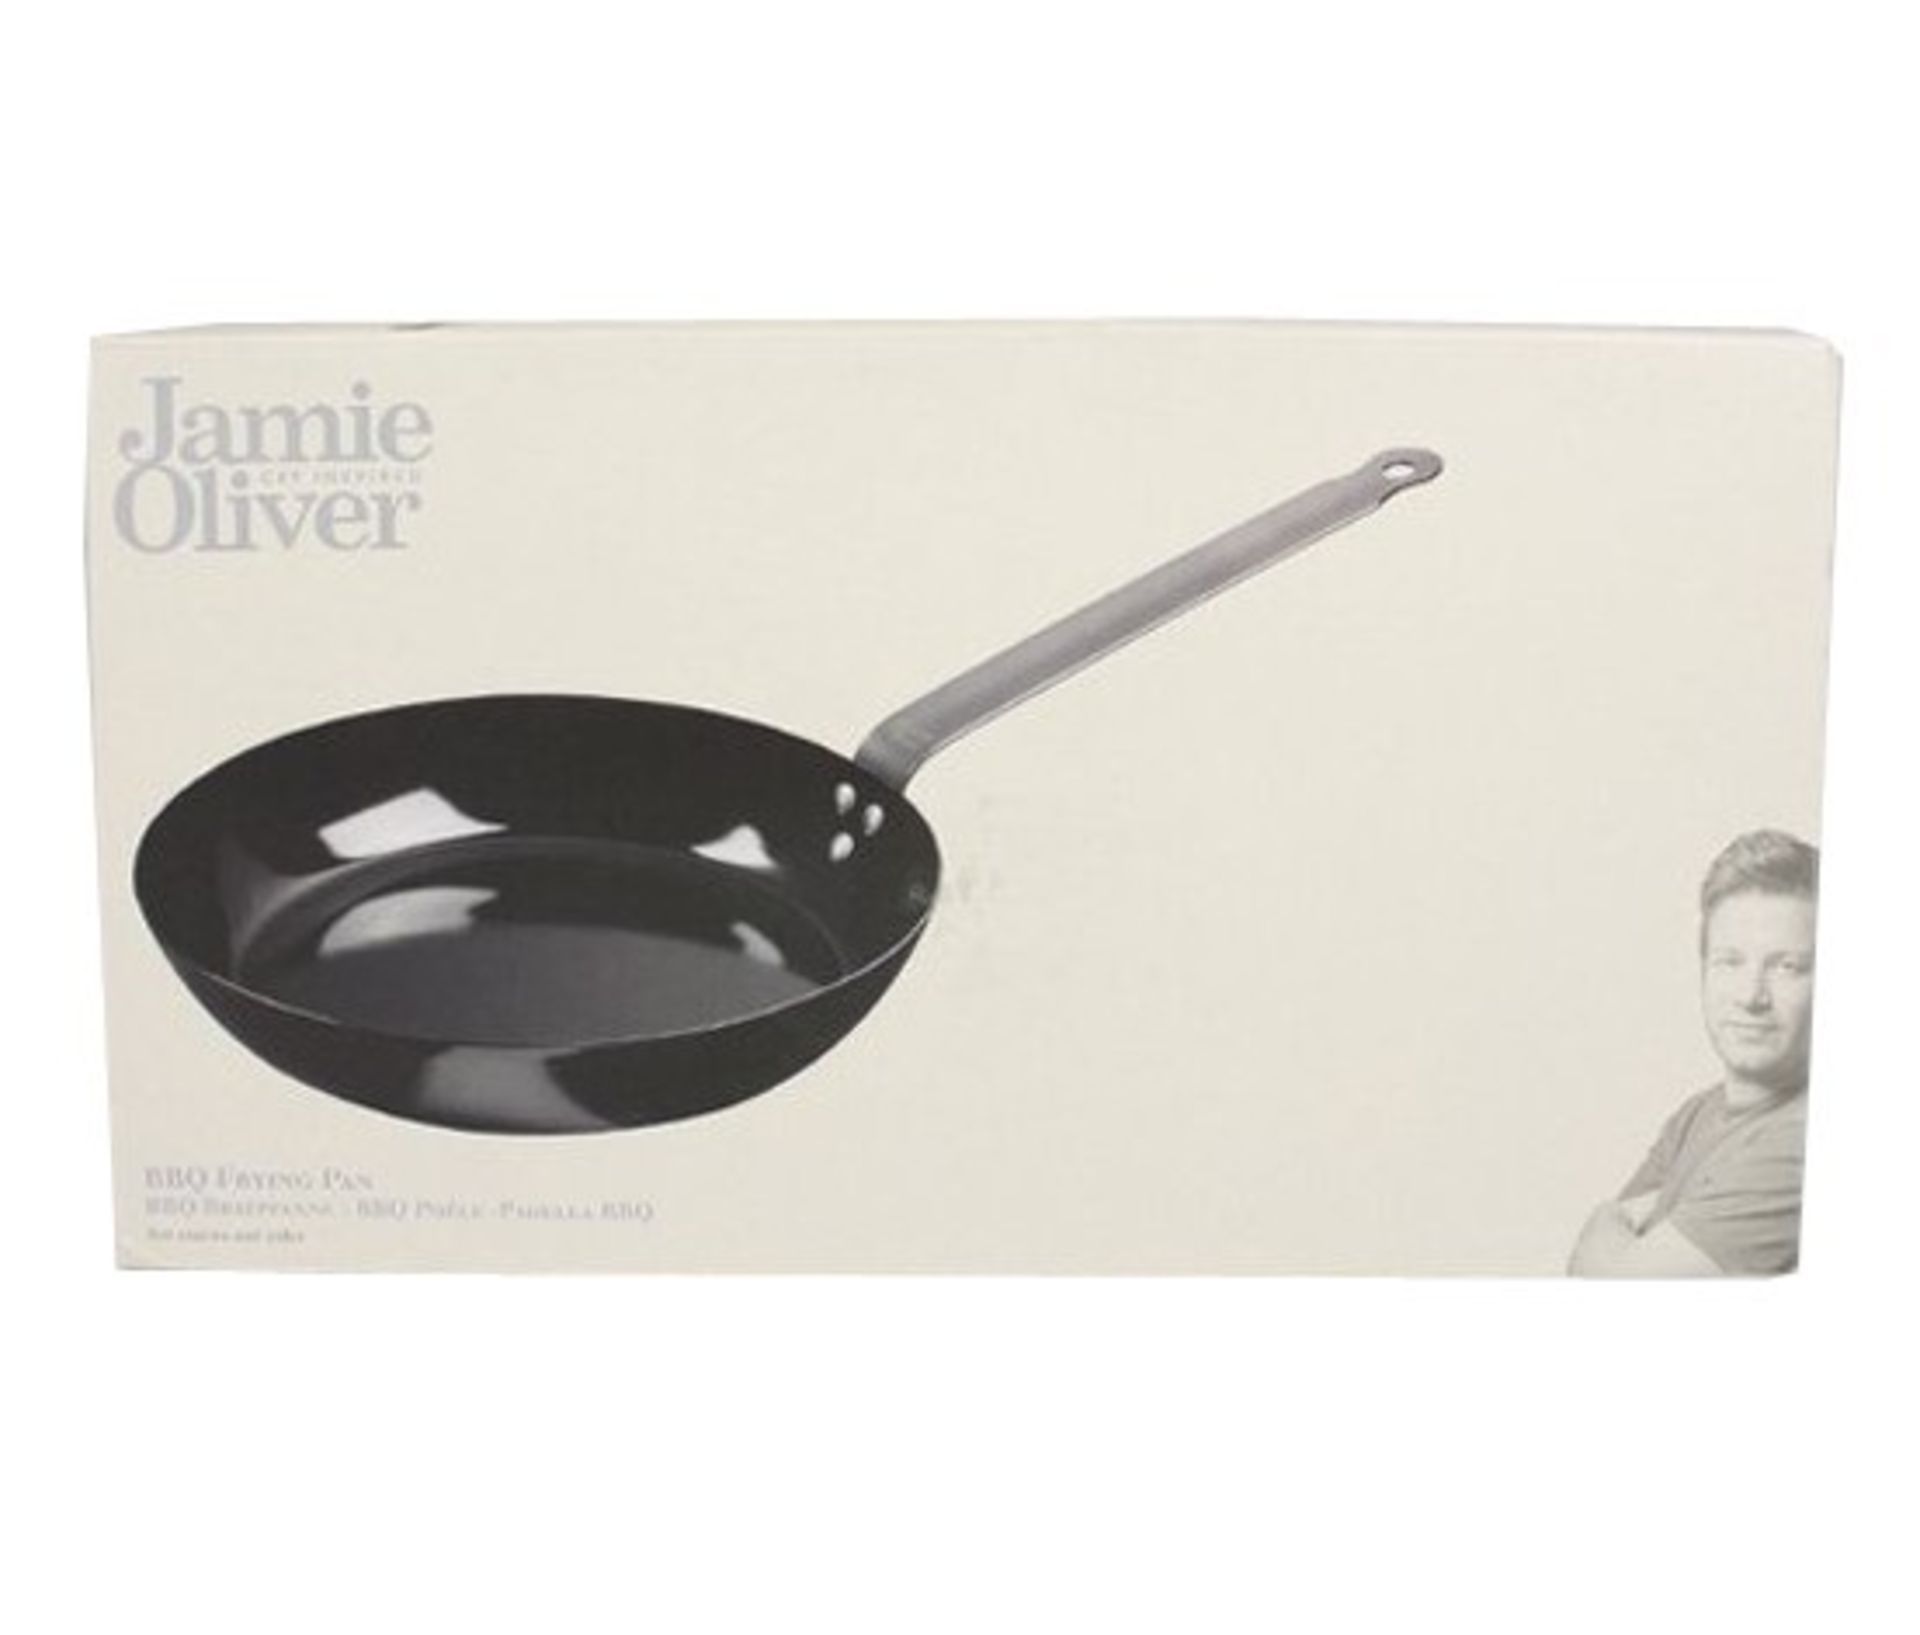 V Brand New Jamie Oliver 24cm BBQ Frying Pan - Carbon Steel With Enamel Coating, Heat Resistant Up